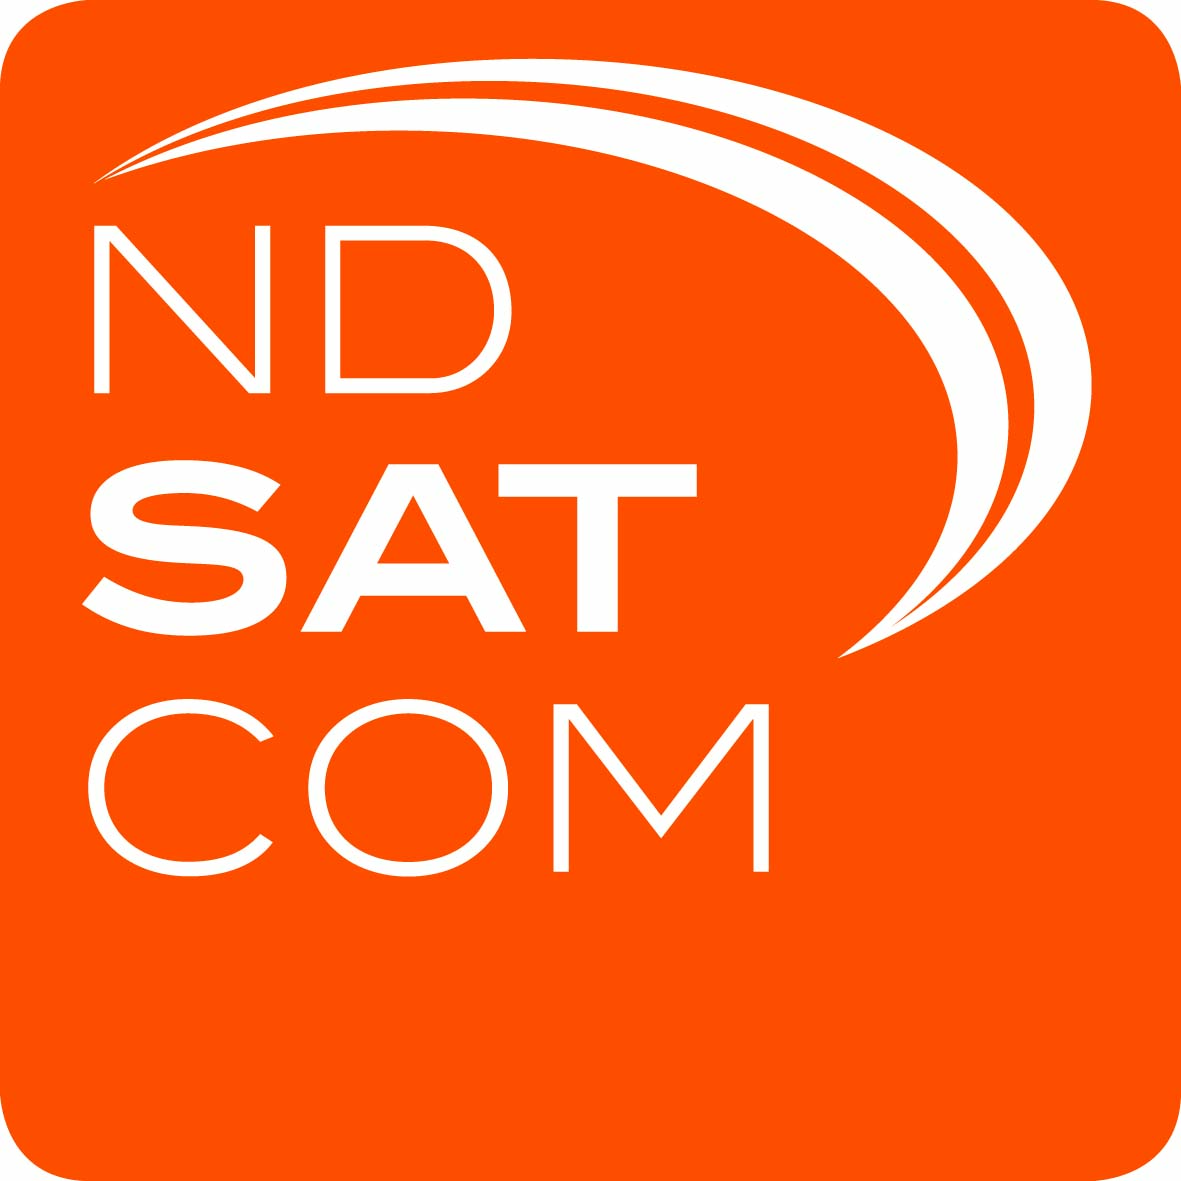 ND SATCOM logo